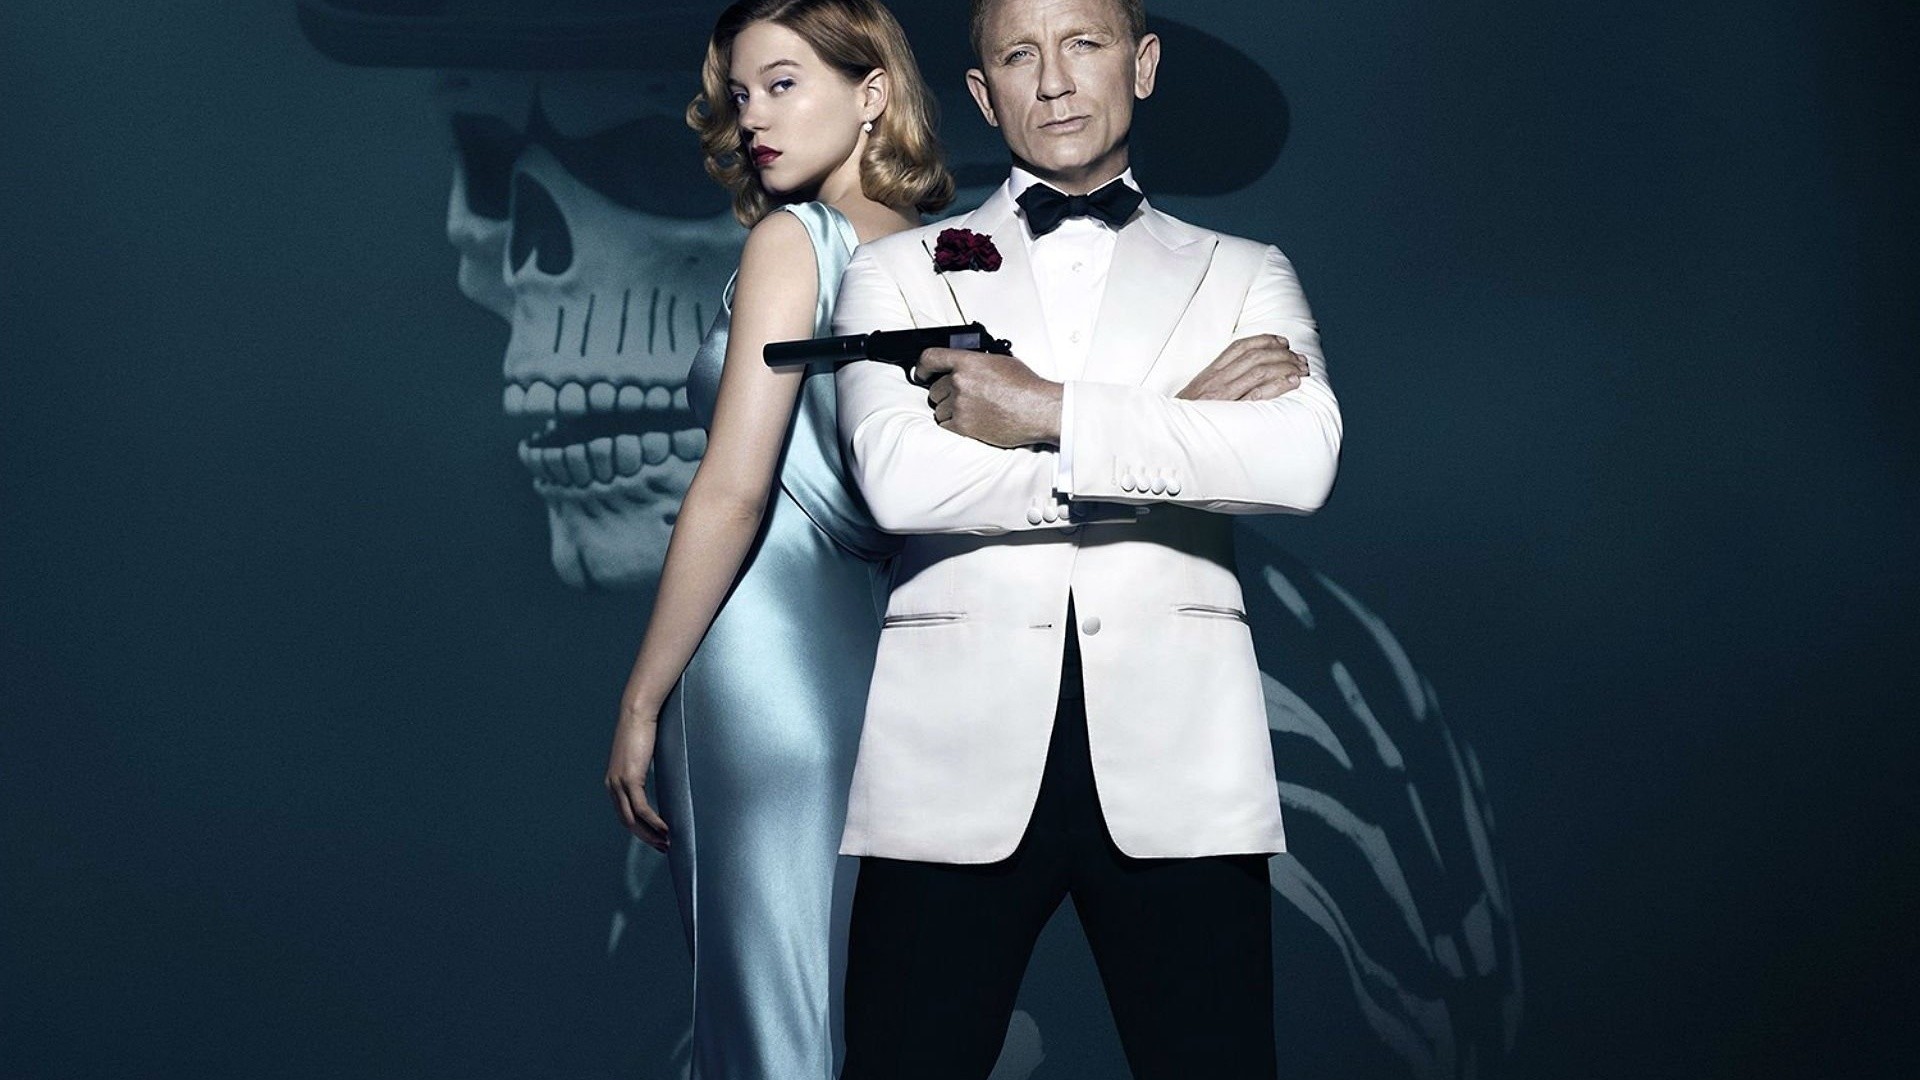 1920x1080 Bond, James Bond, Spectre Movie, Agent 007, Daniel Craig, Spectre 007